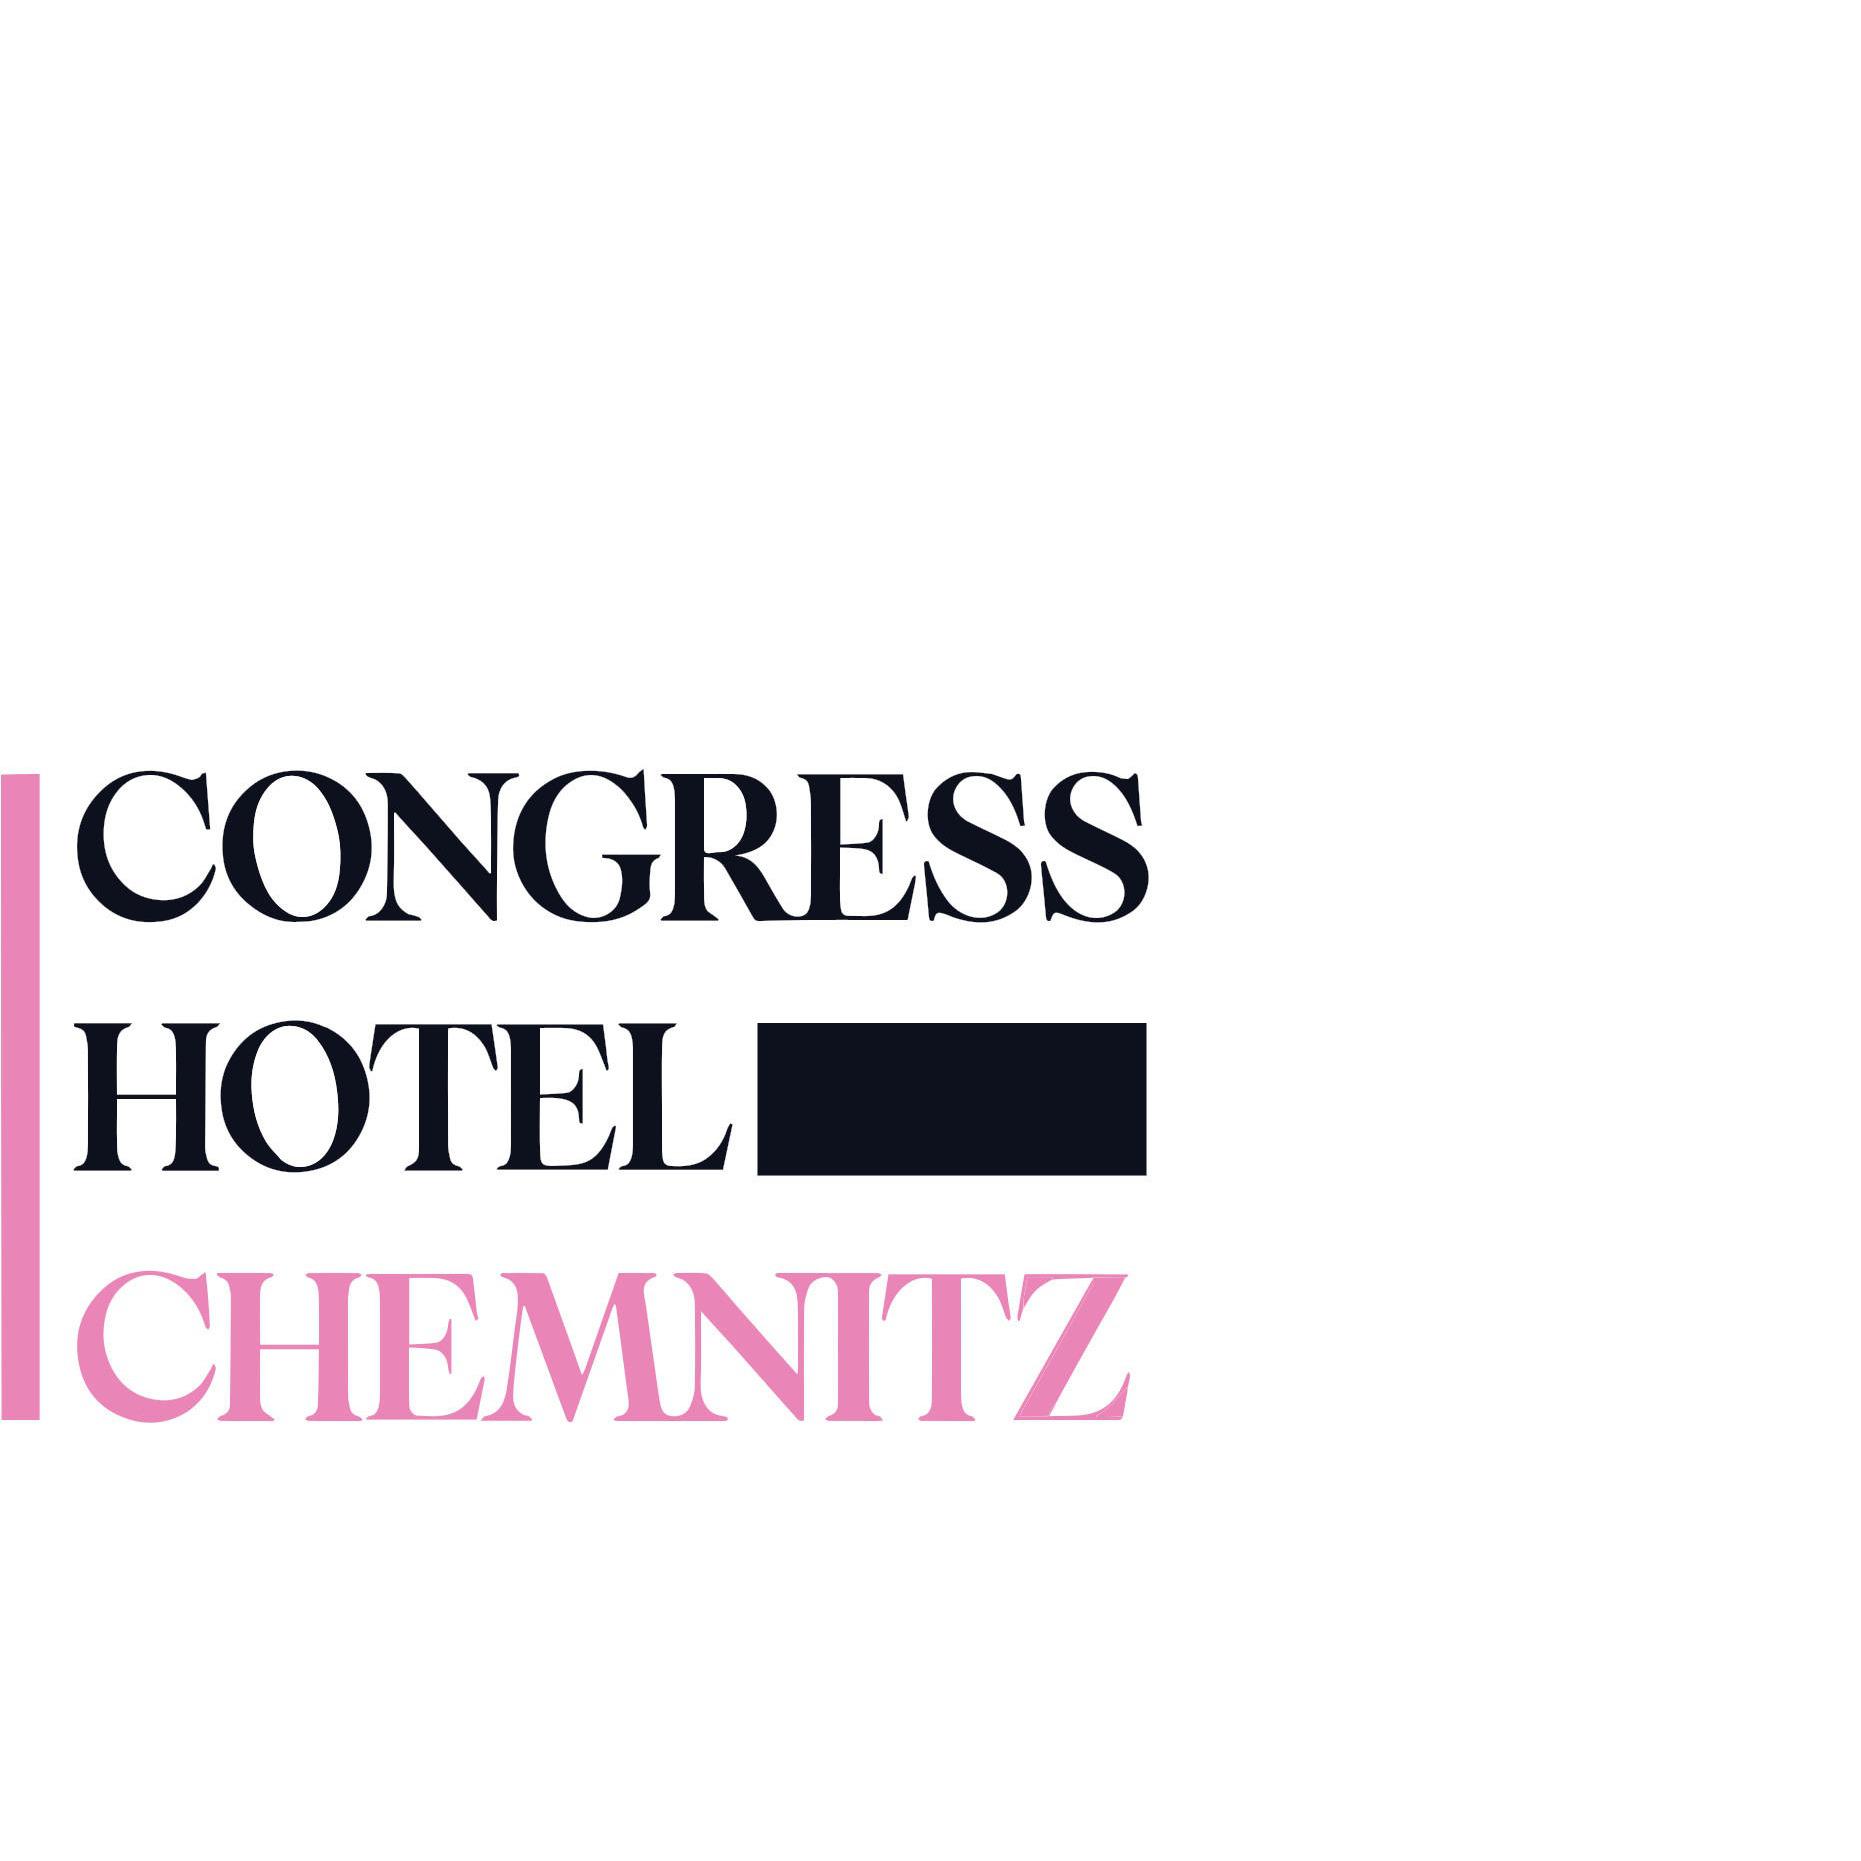 Congress Hotel Chemnitz - Hotel - Chemnitz - 0371 6830 Germany | ShowMeLocal.com